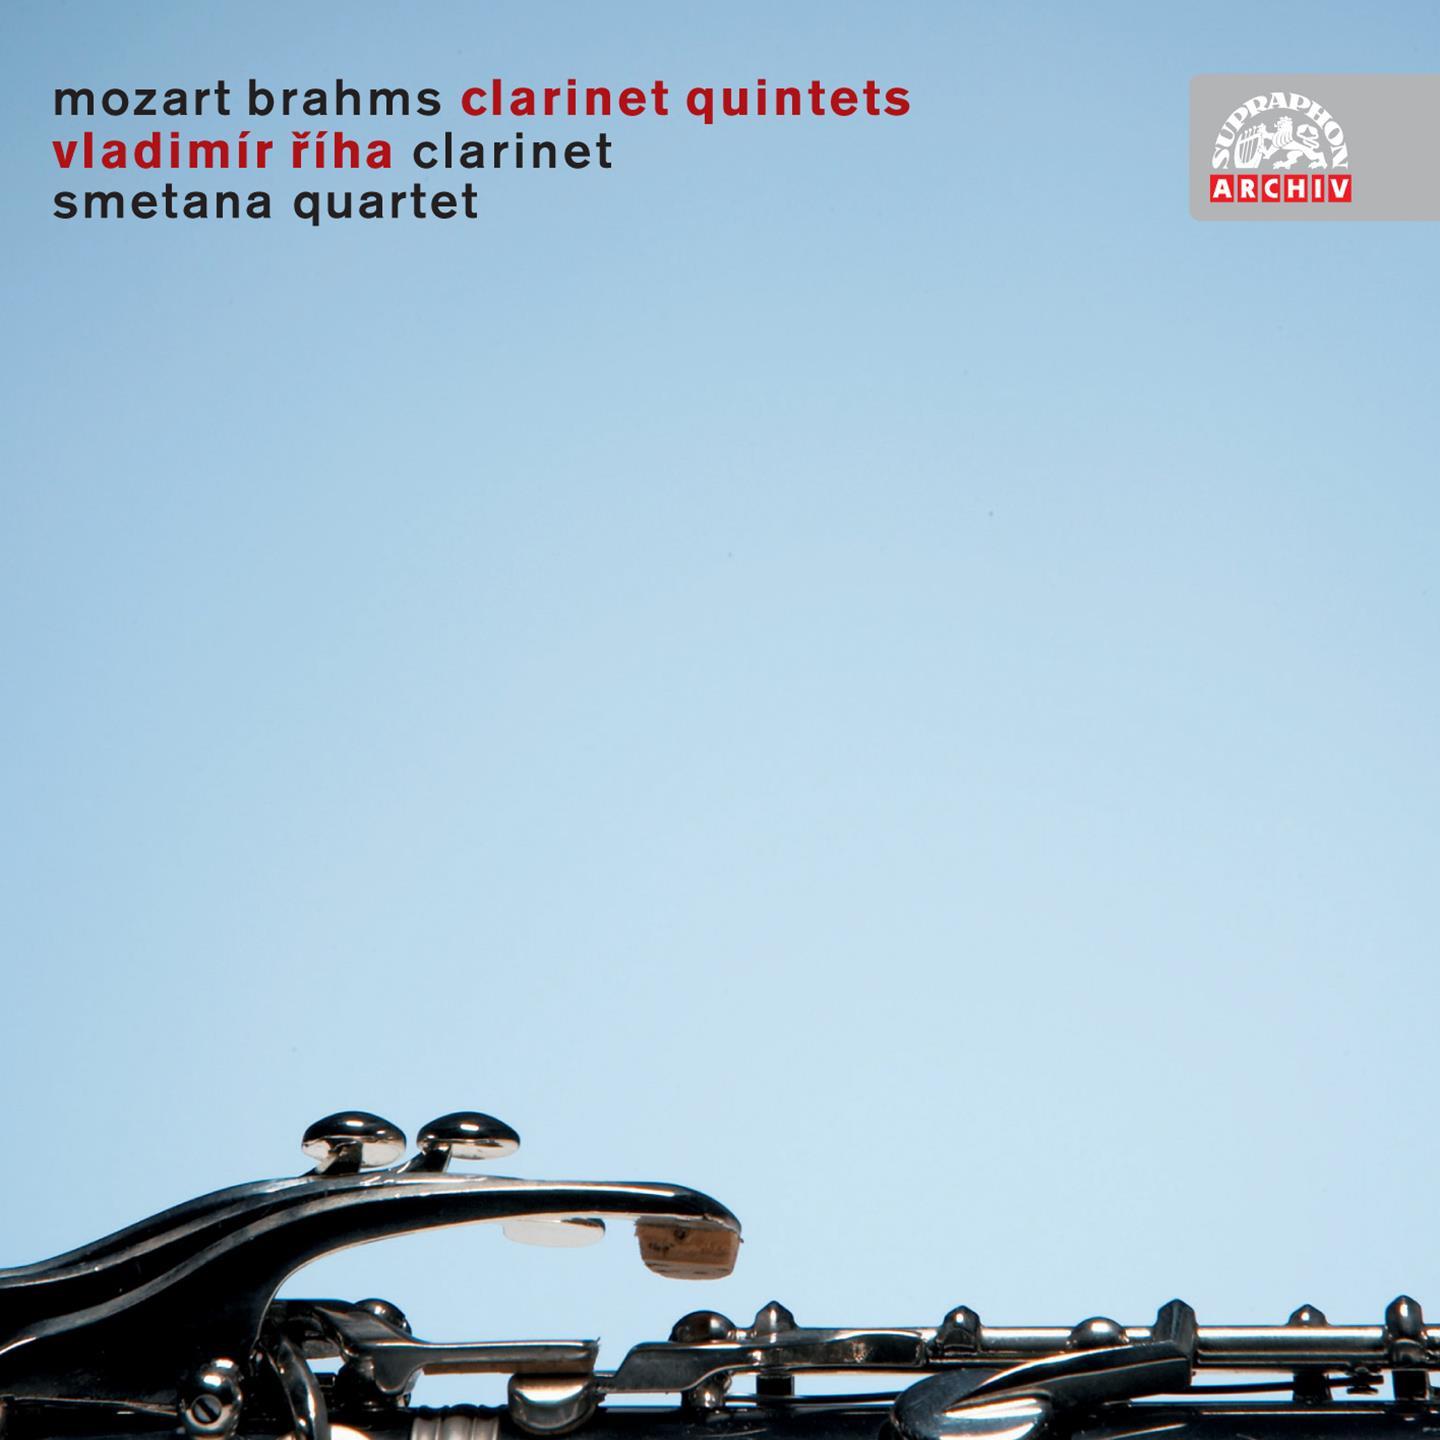 Quintet for Clarinet, 2 Violins, Viola and Cello "Stadler-Quintet" in A-Sharp Major, .: Allegretto con variazioni - Adagio - Allegro